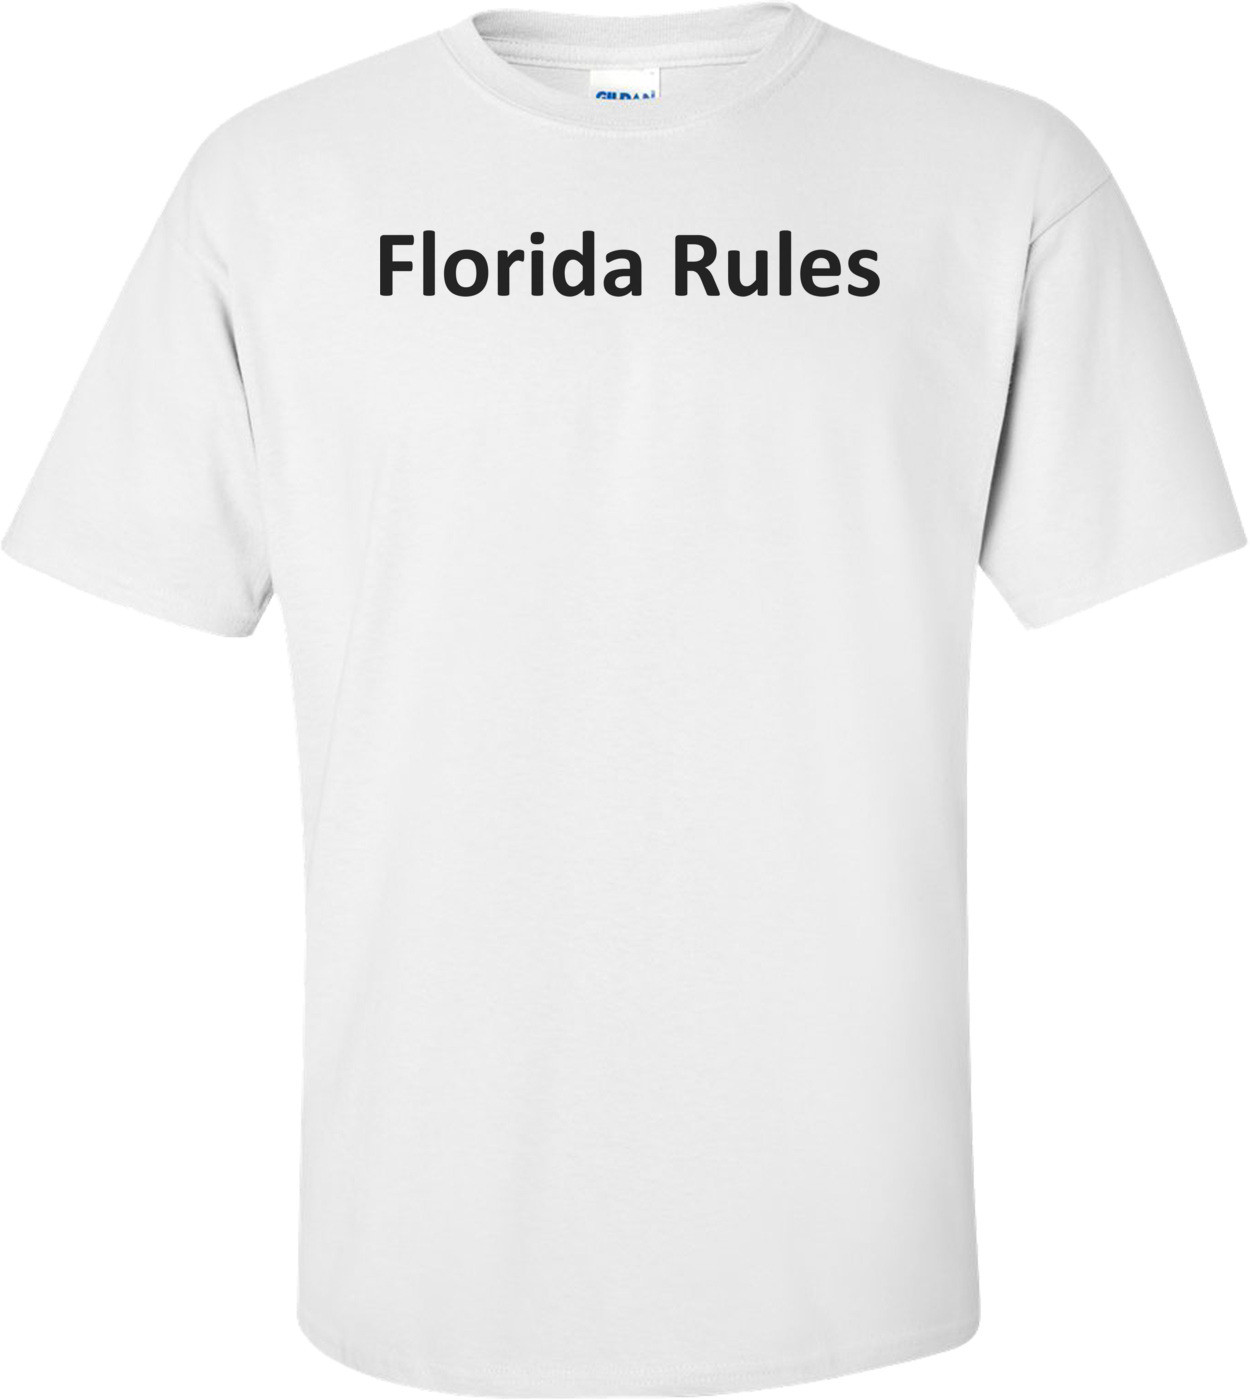 Florida Rules